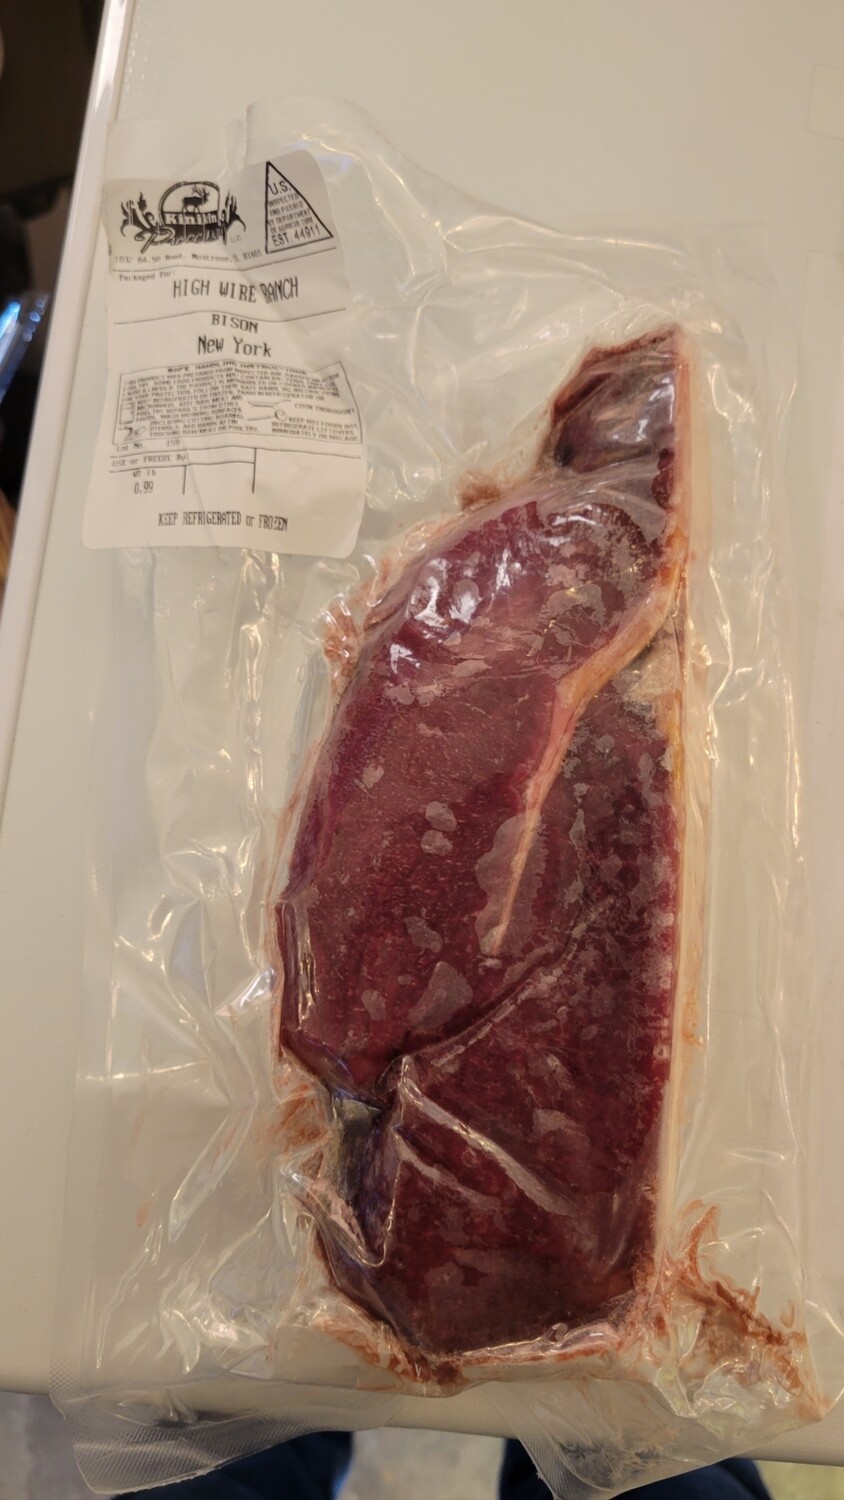 Bison NY Strip Steak